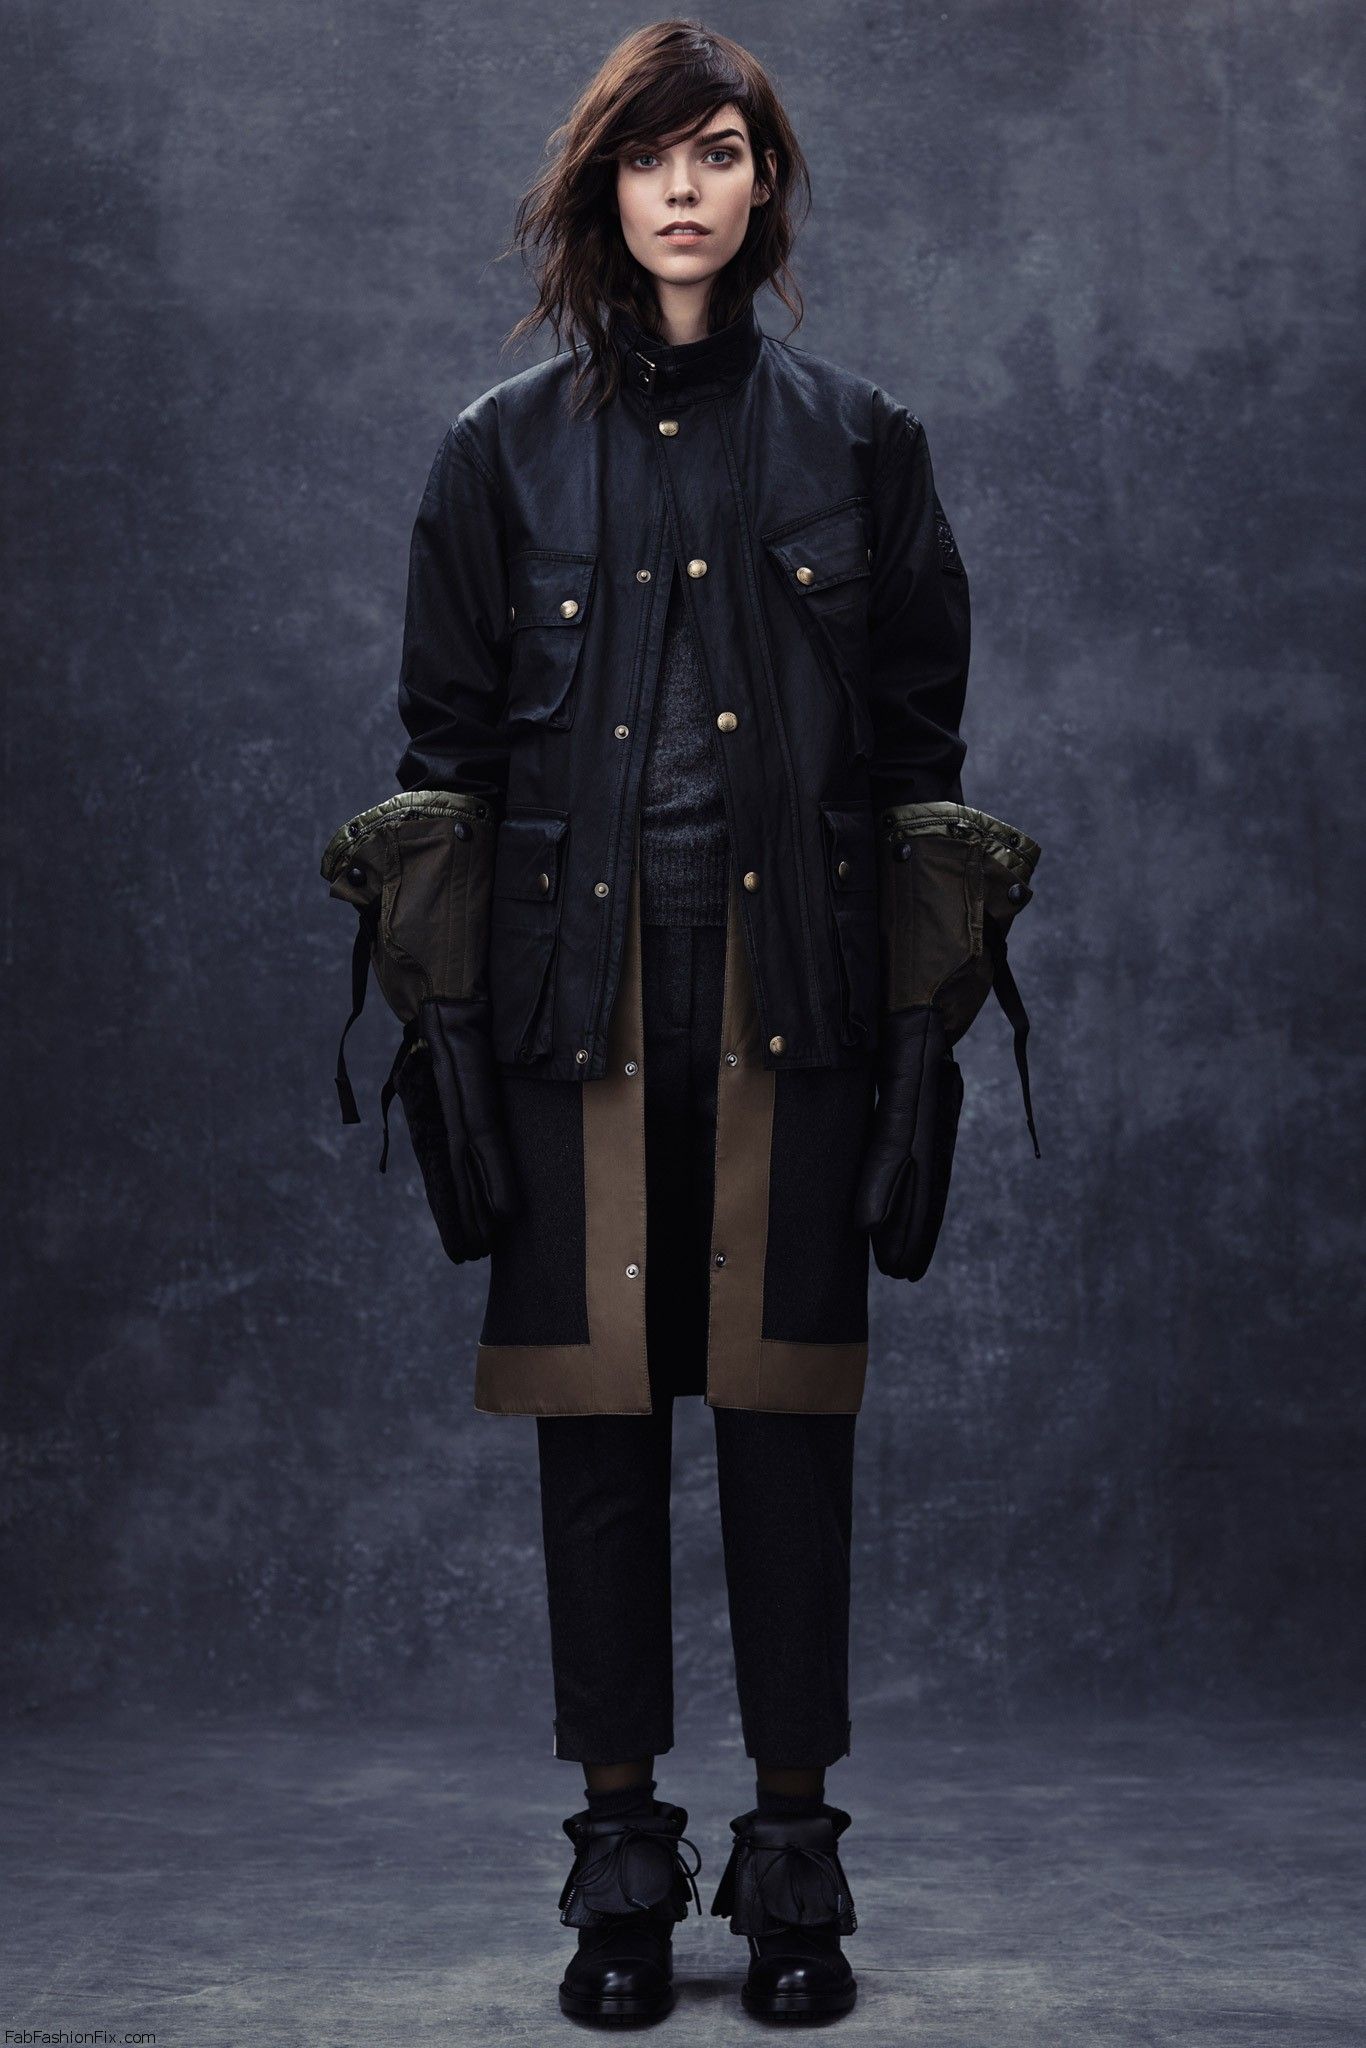 Belstaff fall/winter 2014 collection – London fashion week | Fab ...